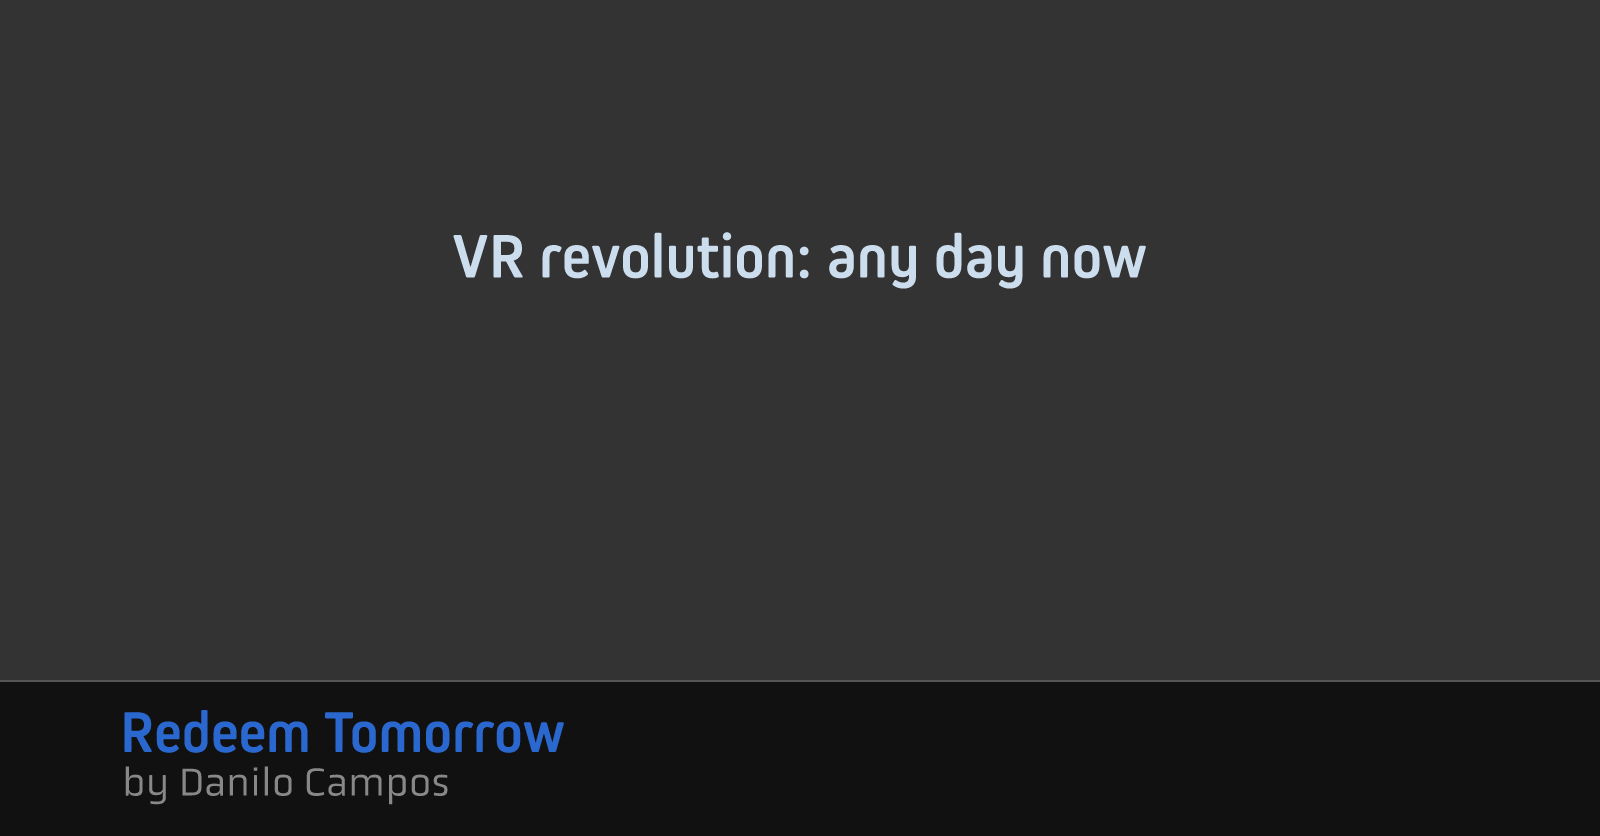 VR revolution: any day now